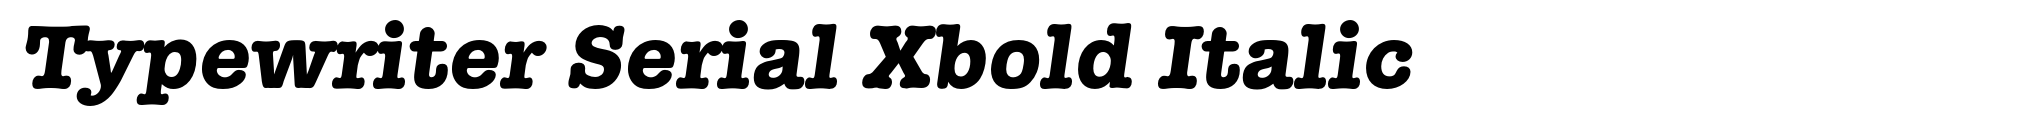 Typewriter Serial Xbold Italic image